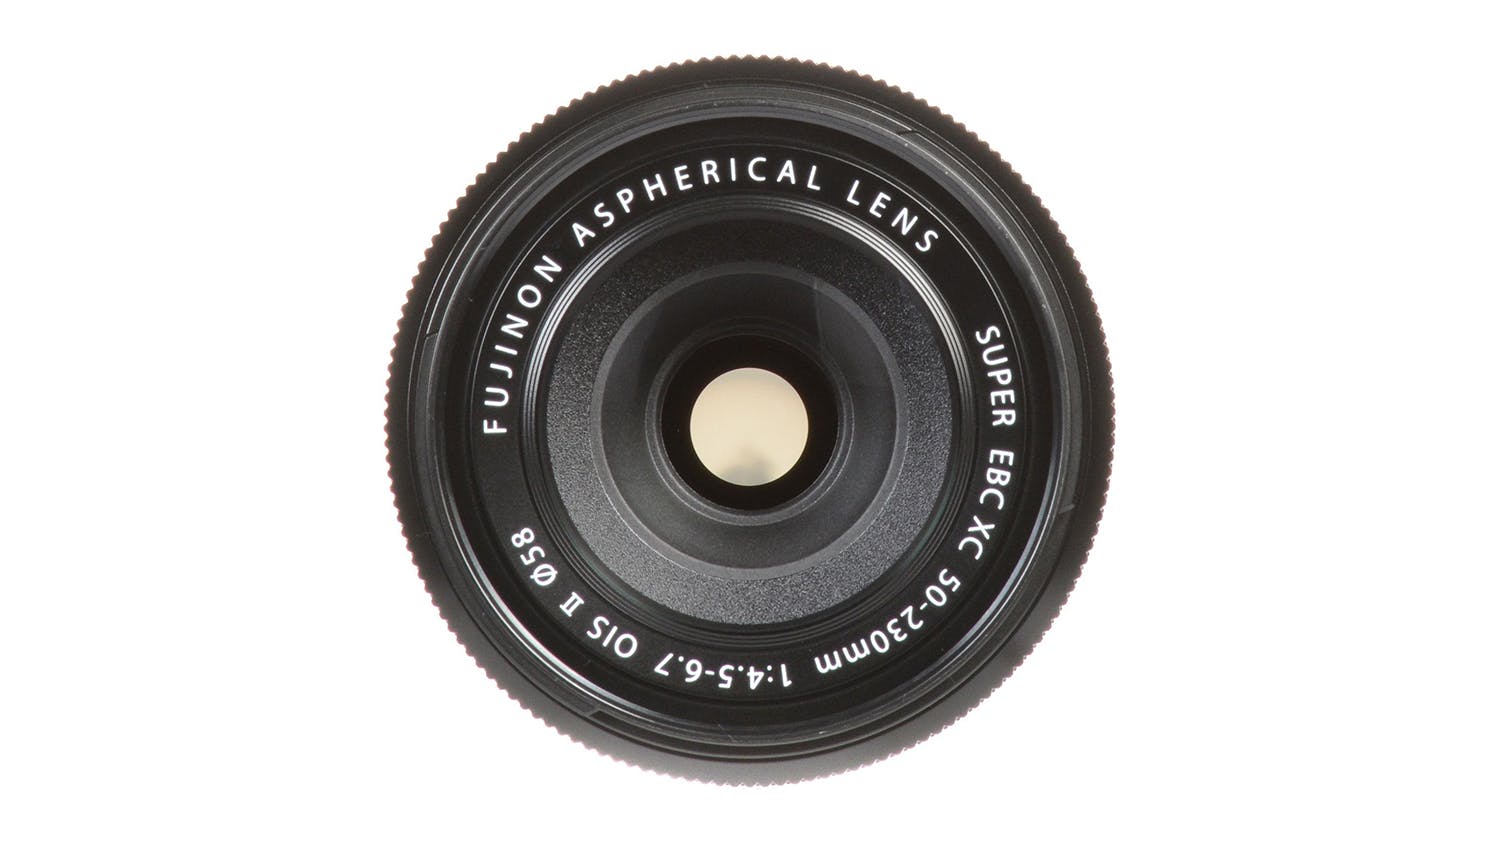 Fujifilm XC 50-230mm f/4.5-6.7 OIS II Lens - Black